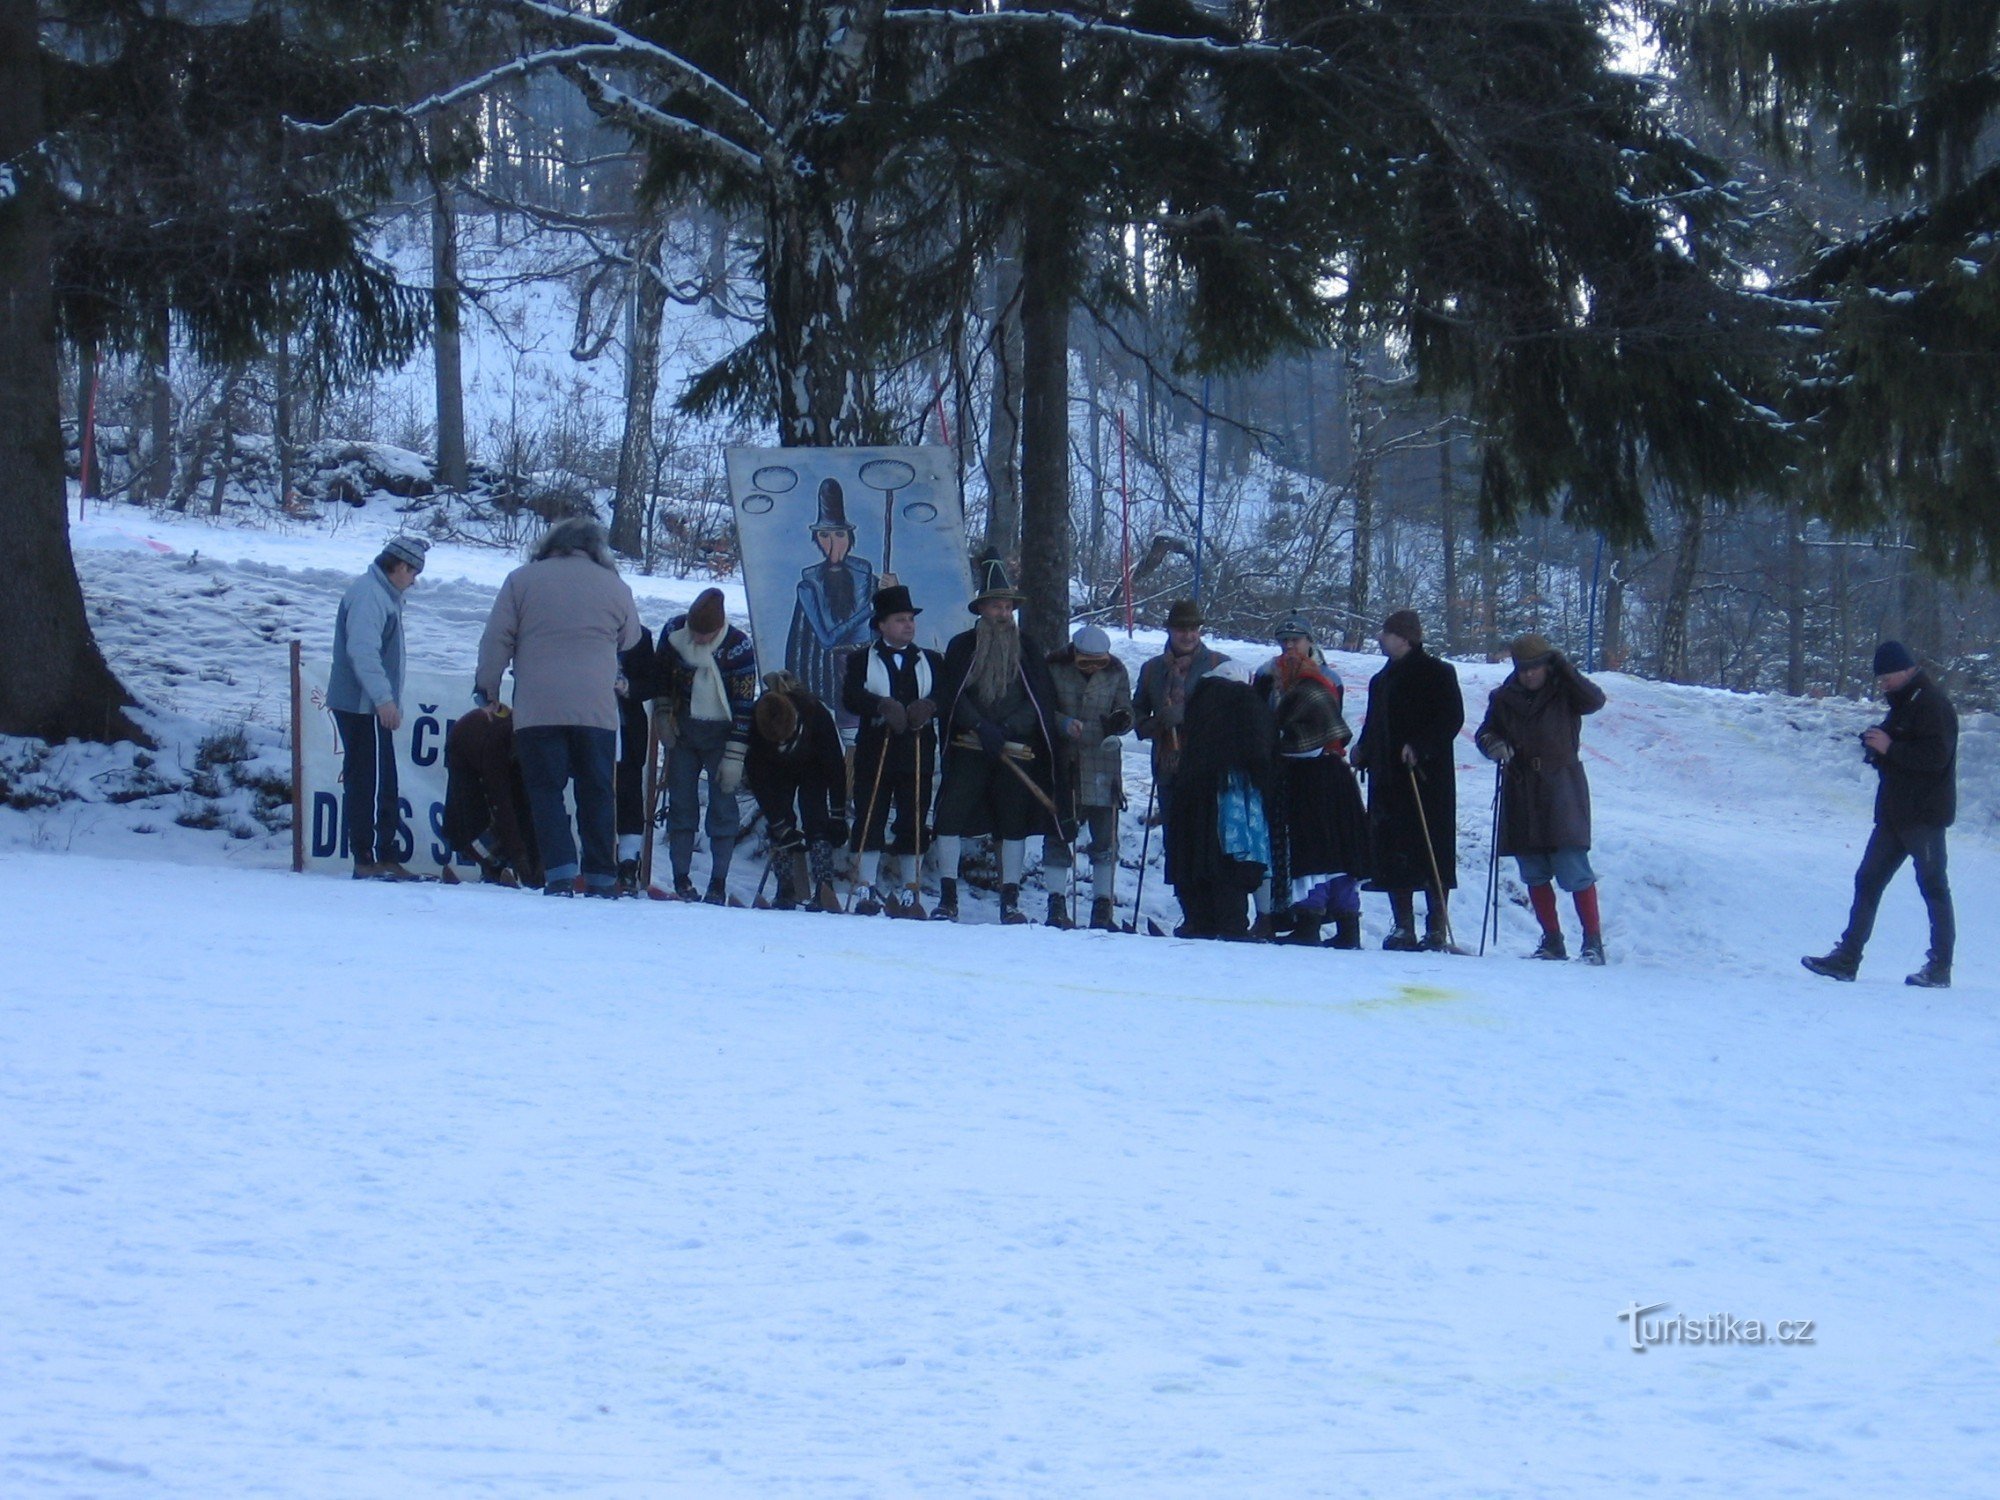 Karneval auf Skiern - Veřovice - Januar 2012